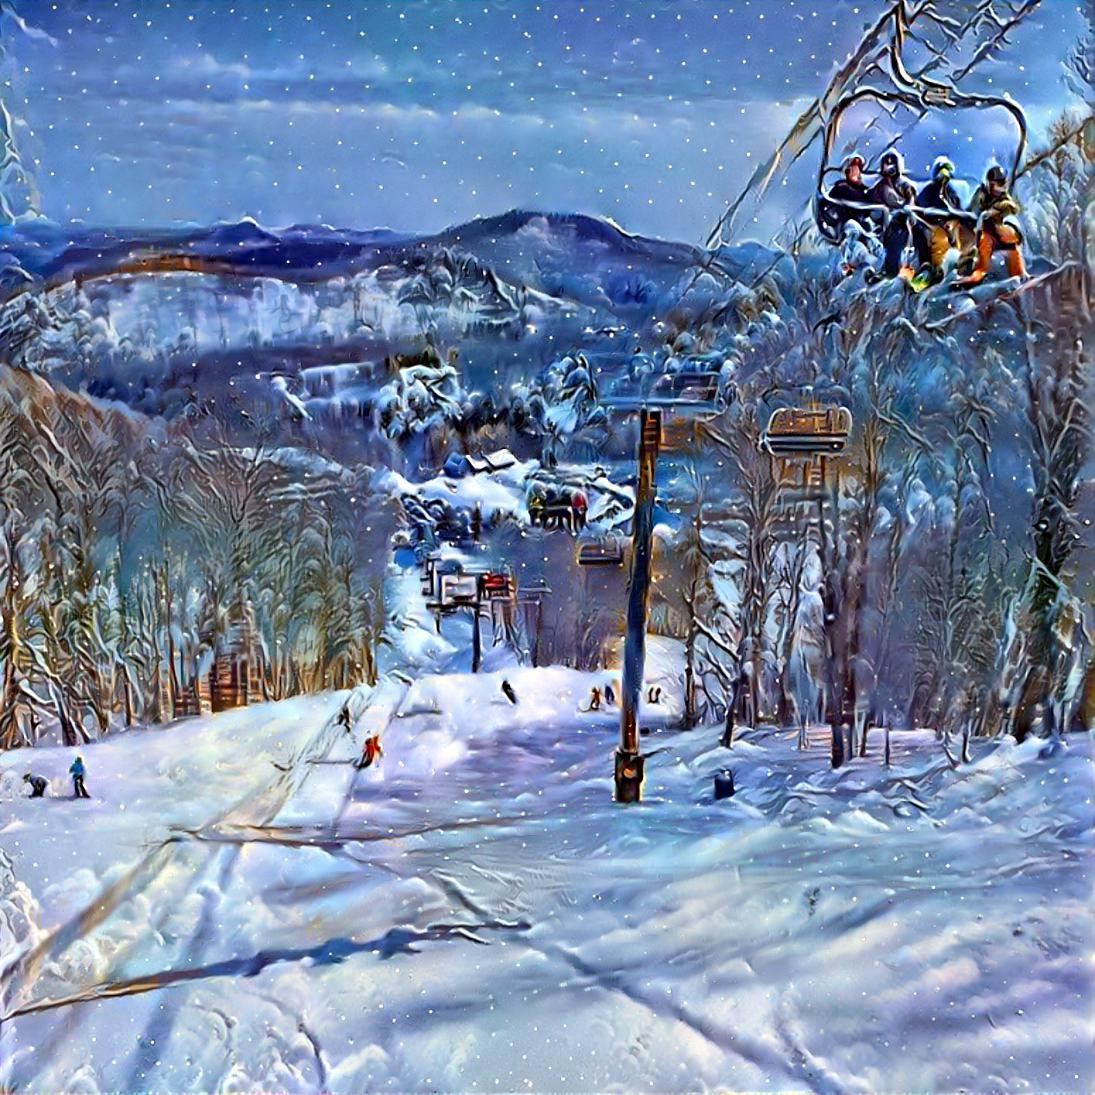 Skiing at Killington in Vermont